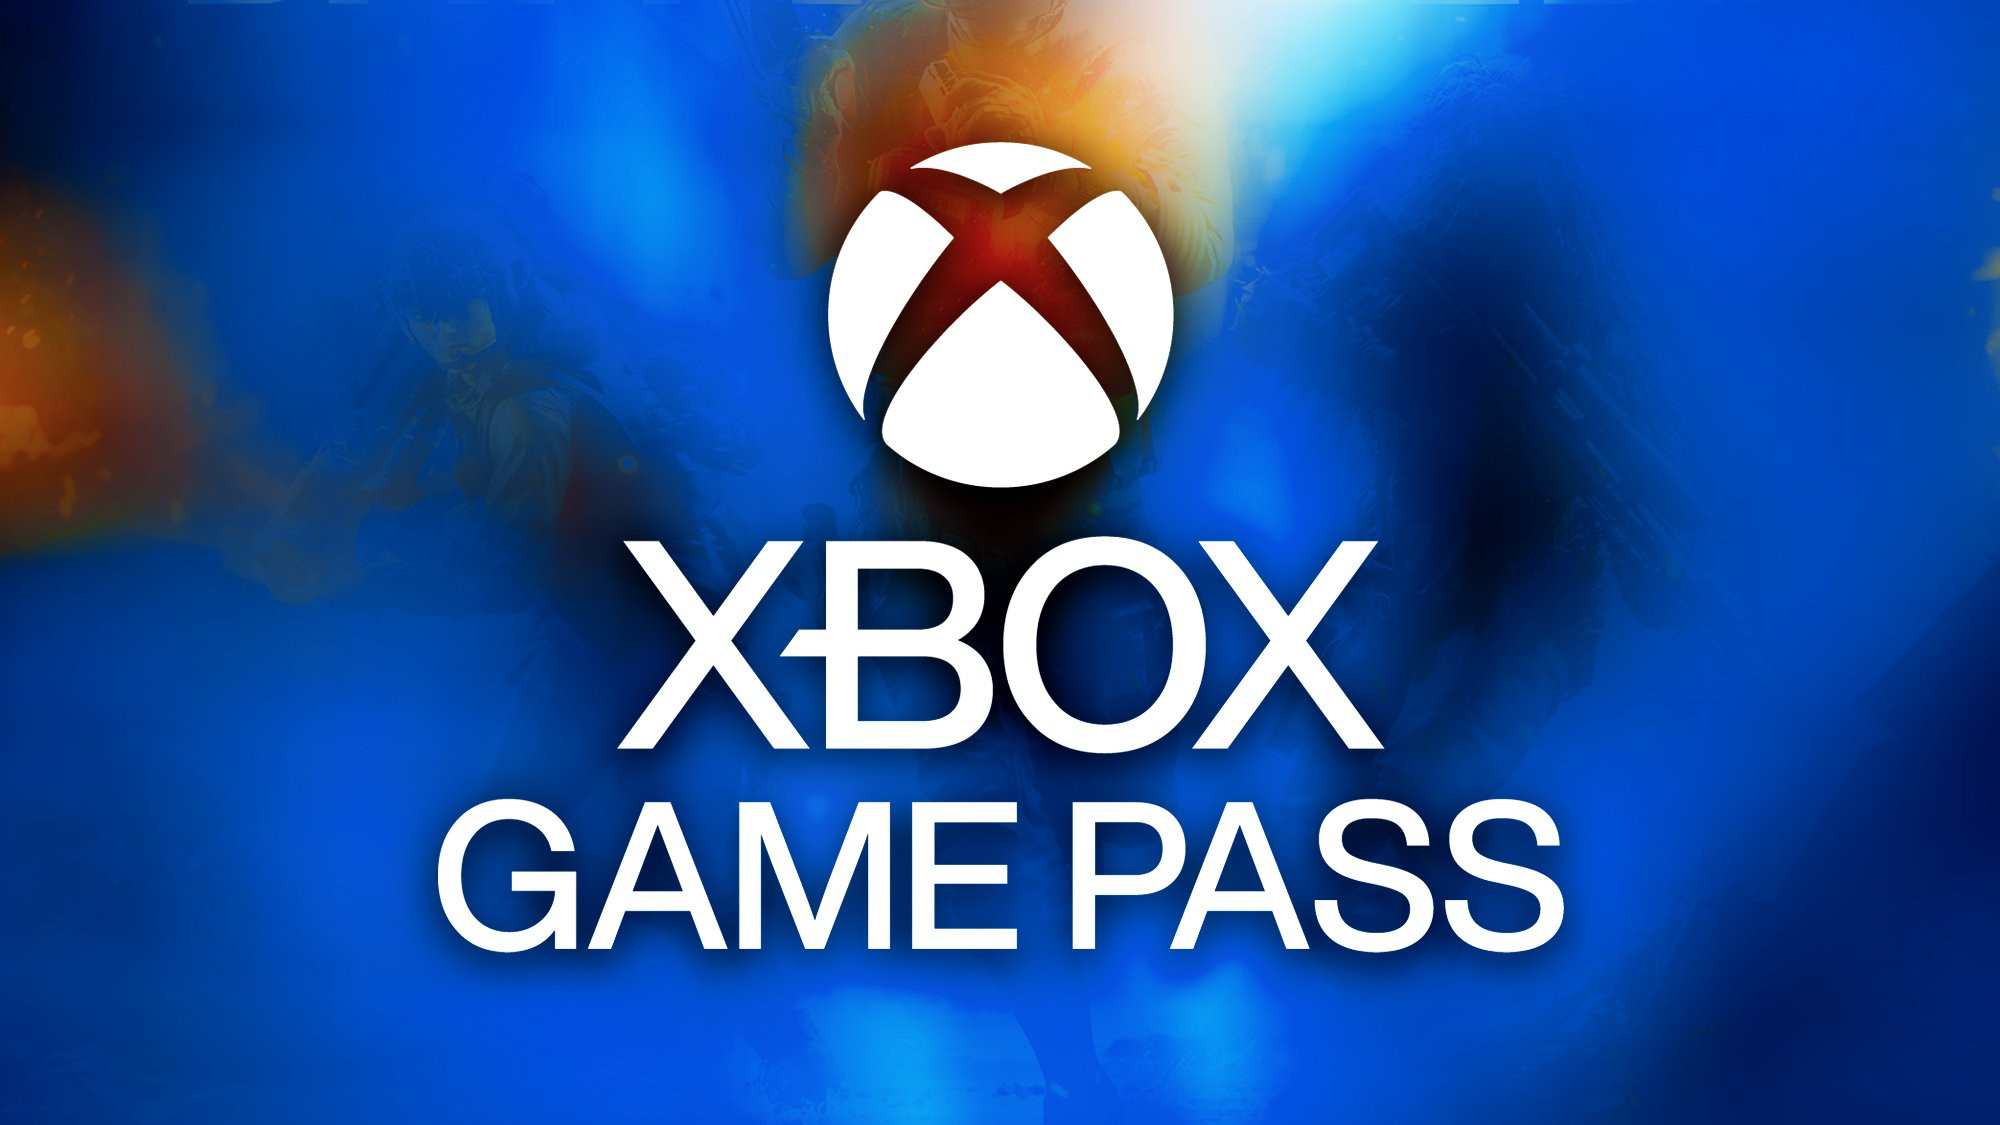 Xbox game pass gratuit ? oui mais...